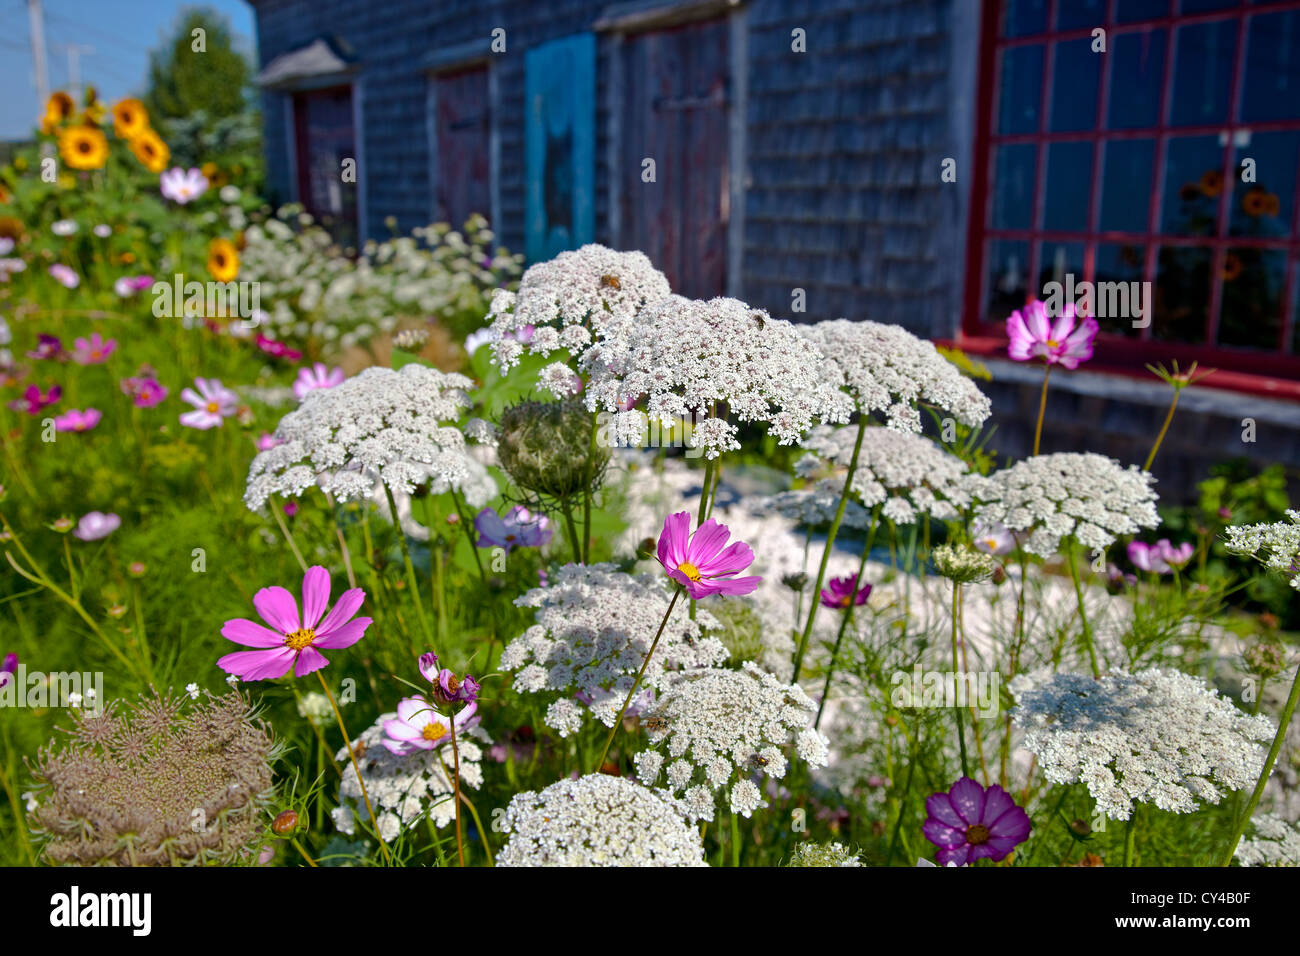 A flower garden at the Frying Pan Gallery in Wellfleet, MA Stock Photo